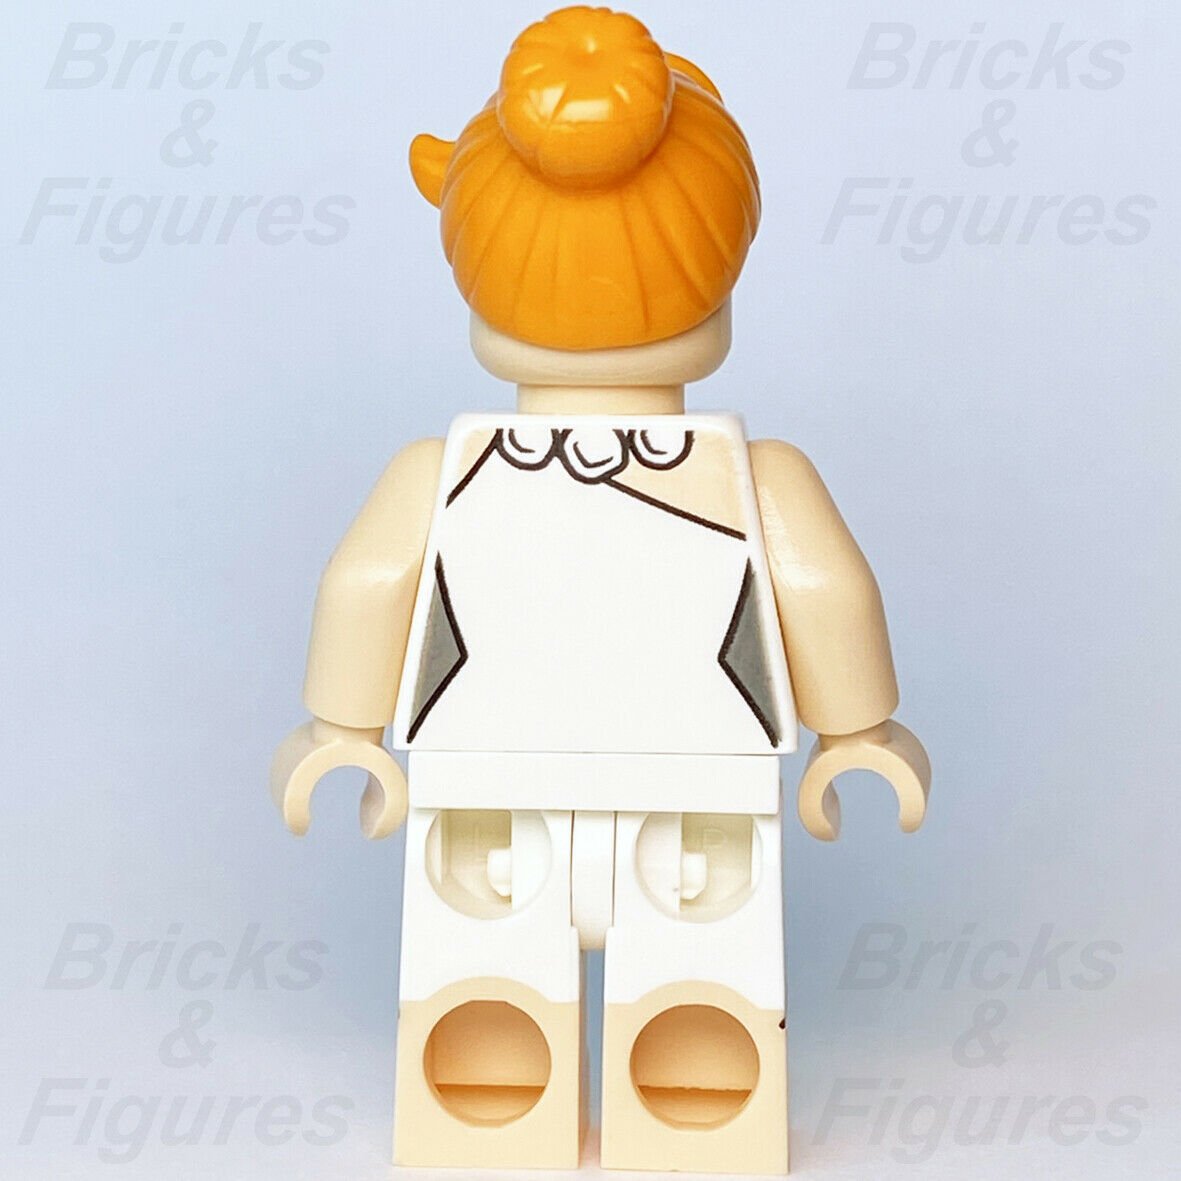 New Ideas LEGO Wilma Flintstone CUUSOO The Flintstones Minifigure 21316 idea046 - Bricks & Figures